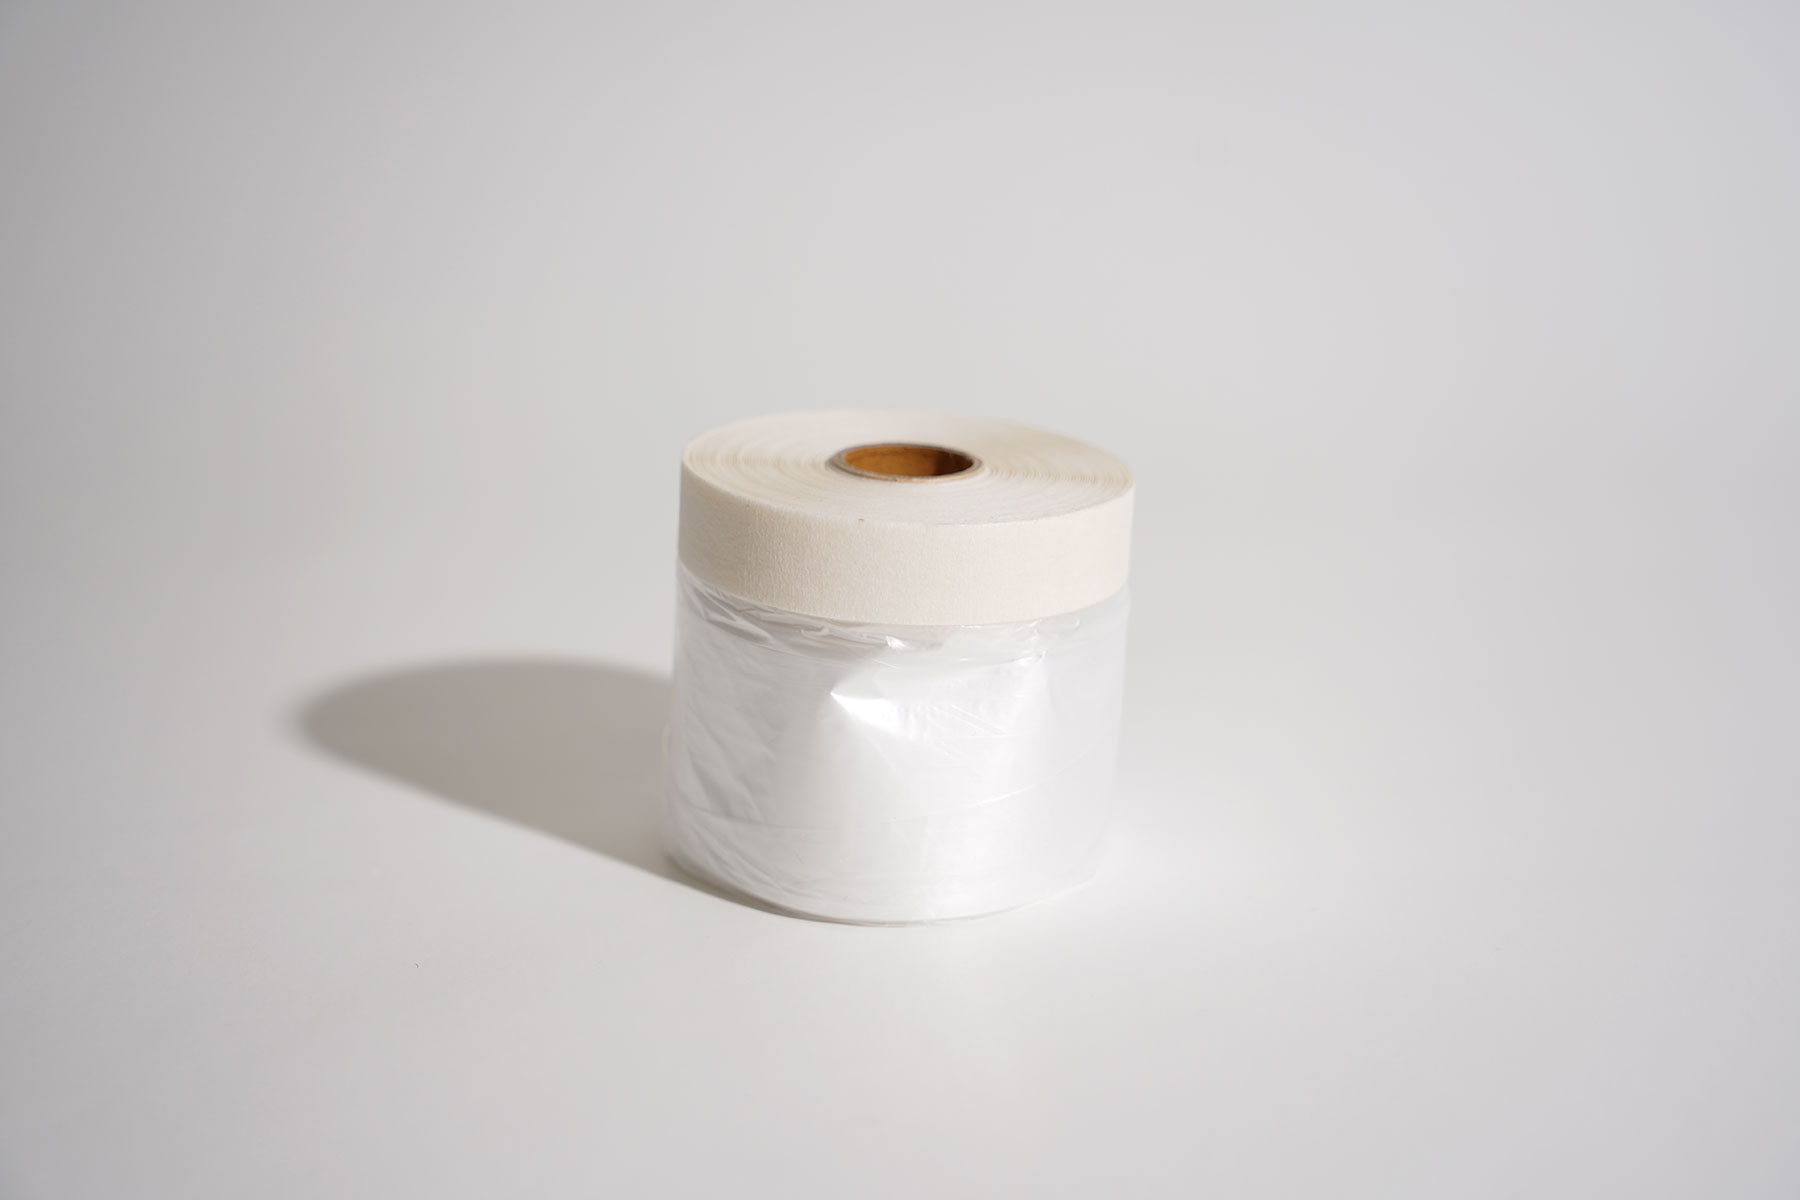             Película de enmascaramiento con cinta adhesiva 55cm x 20m
        